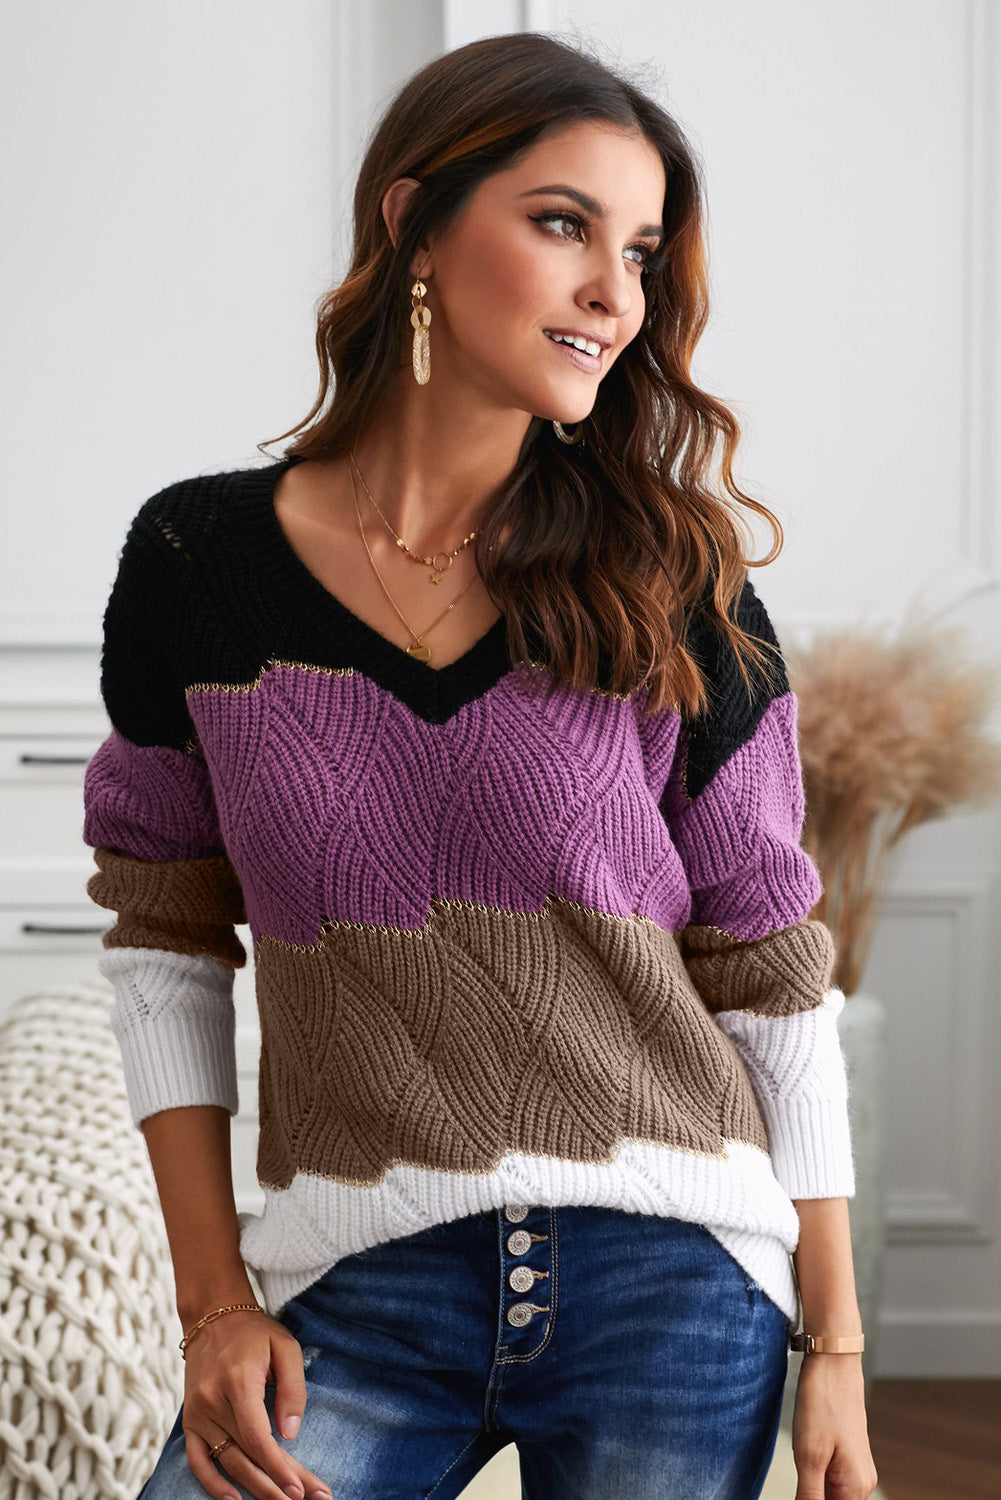 Women's Black Colorblock V Neck Textured Knit Sweater